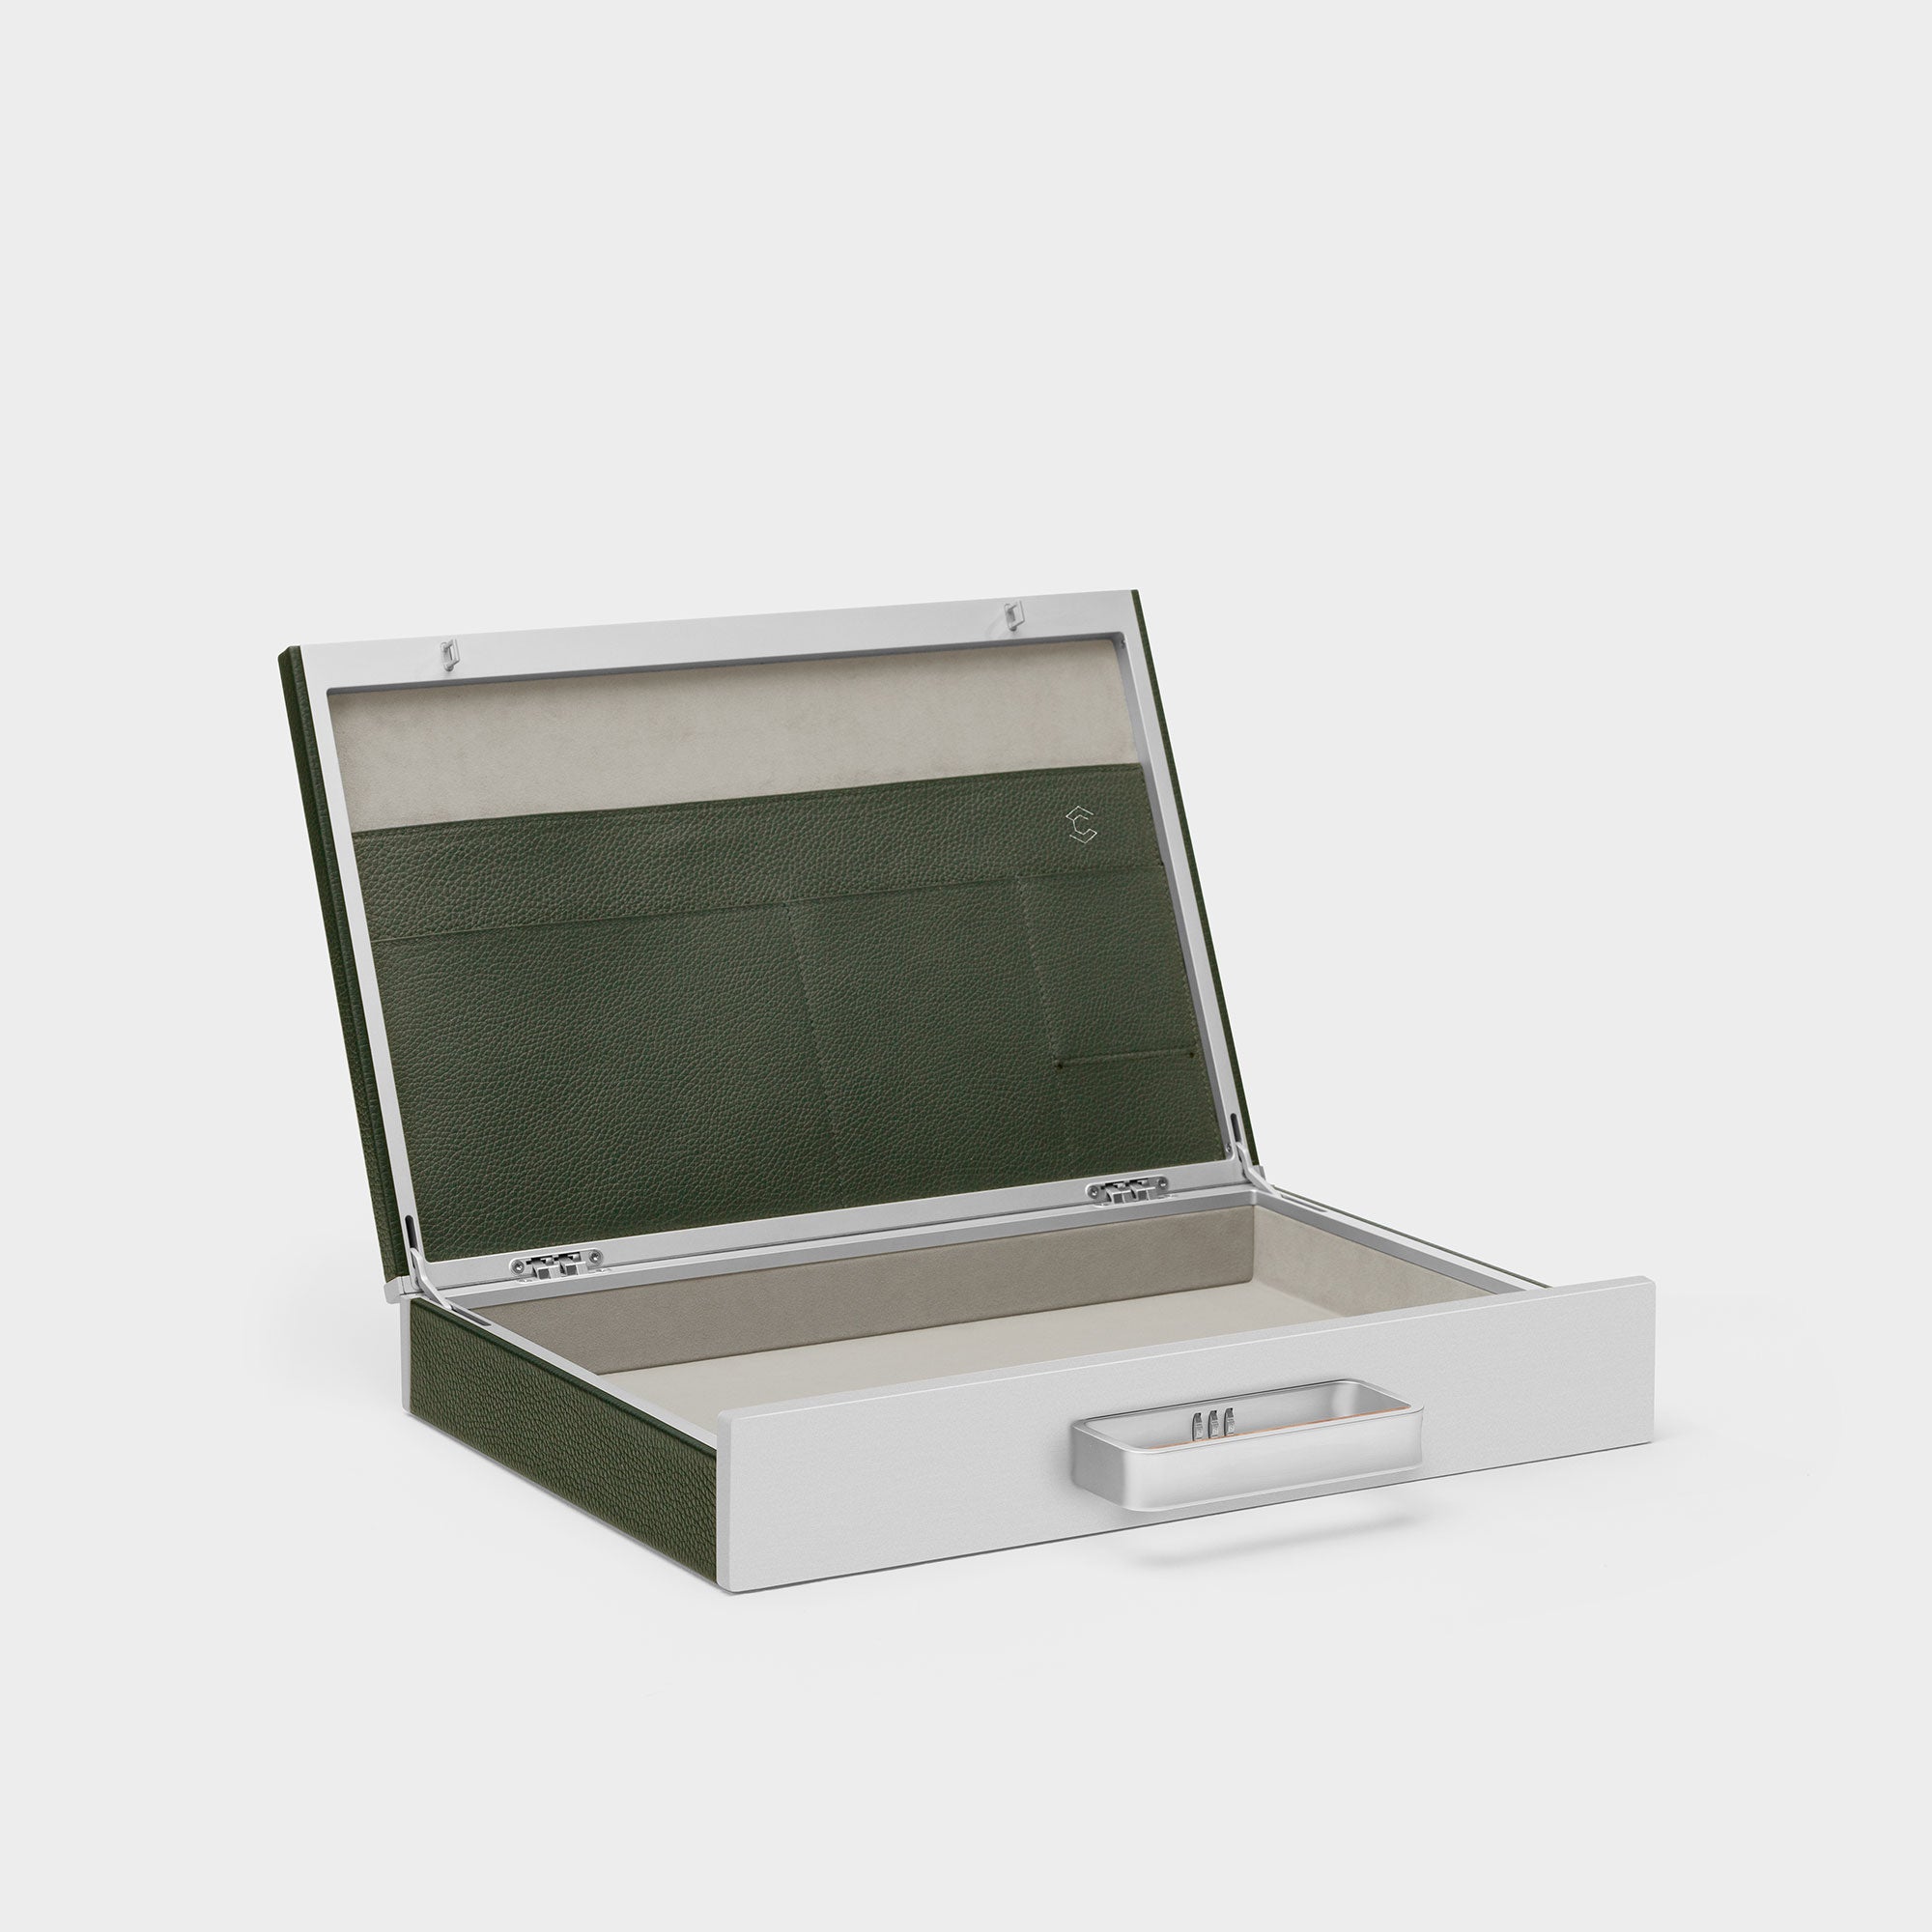 Open Mackenzie briefcase in khaki with Sea sand Alcantara interior with wooden handle